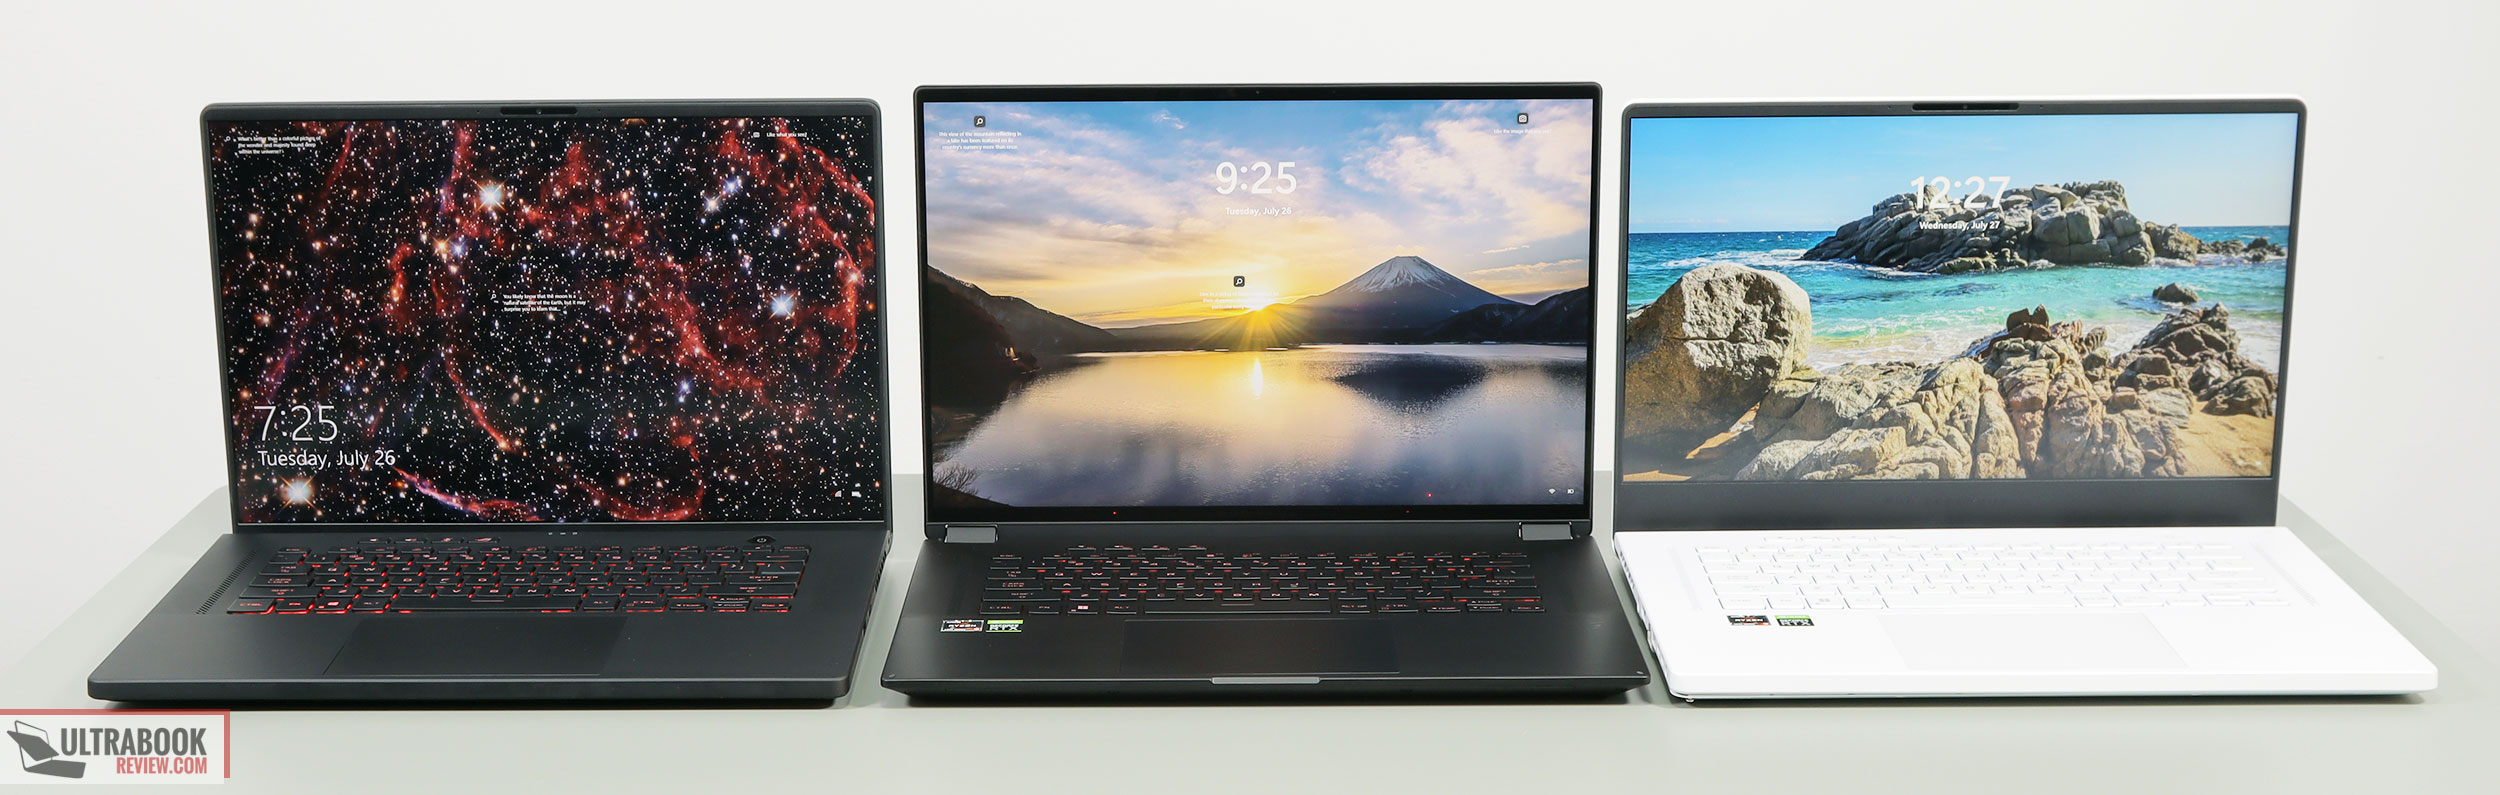 Lenovo Yoga 3 Pro-1370 ultraportable laptop review - Tech Advisor